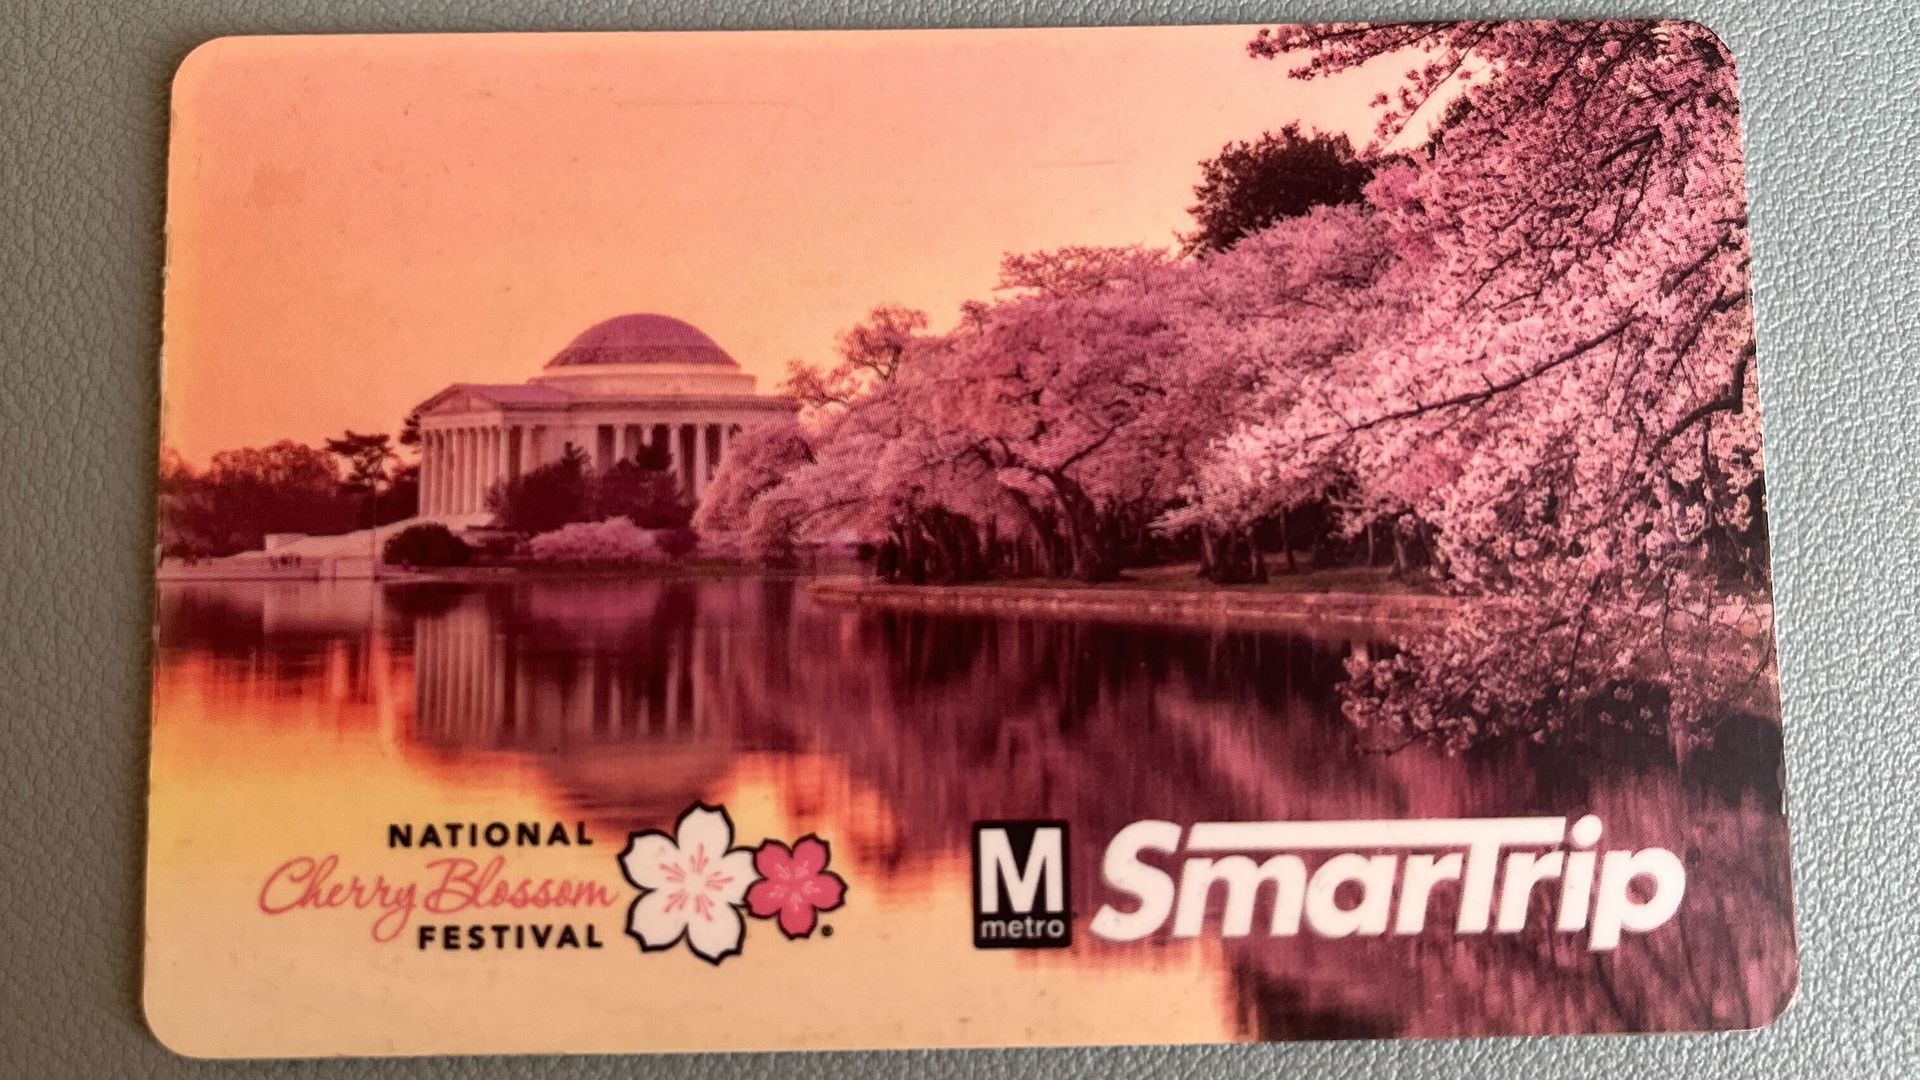 A 2018 commemorative metro card